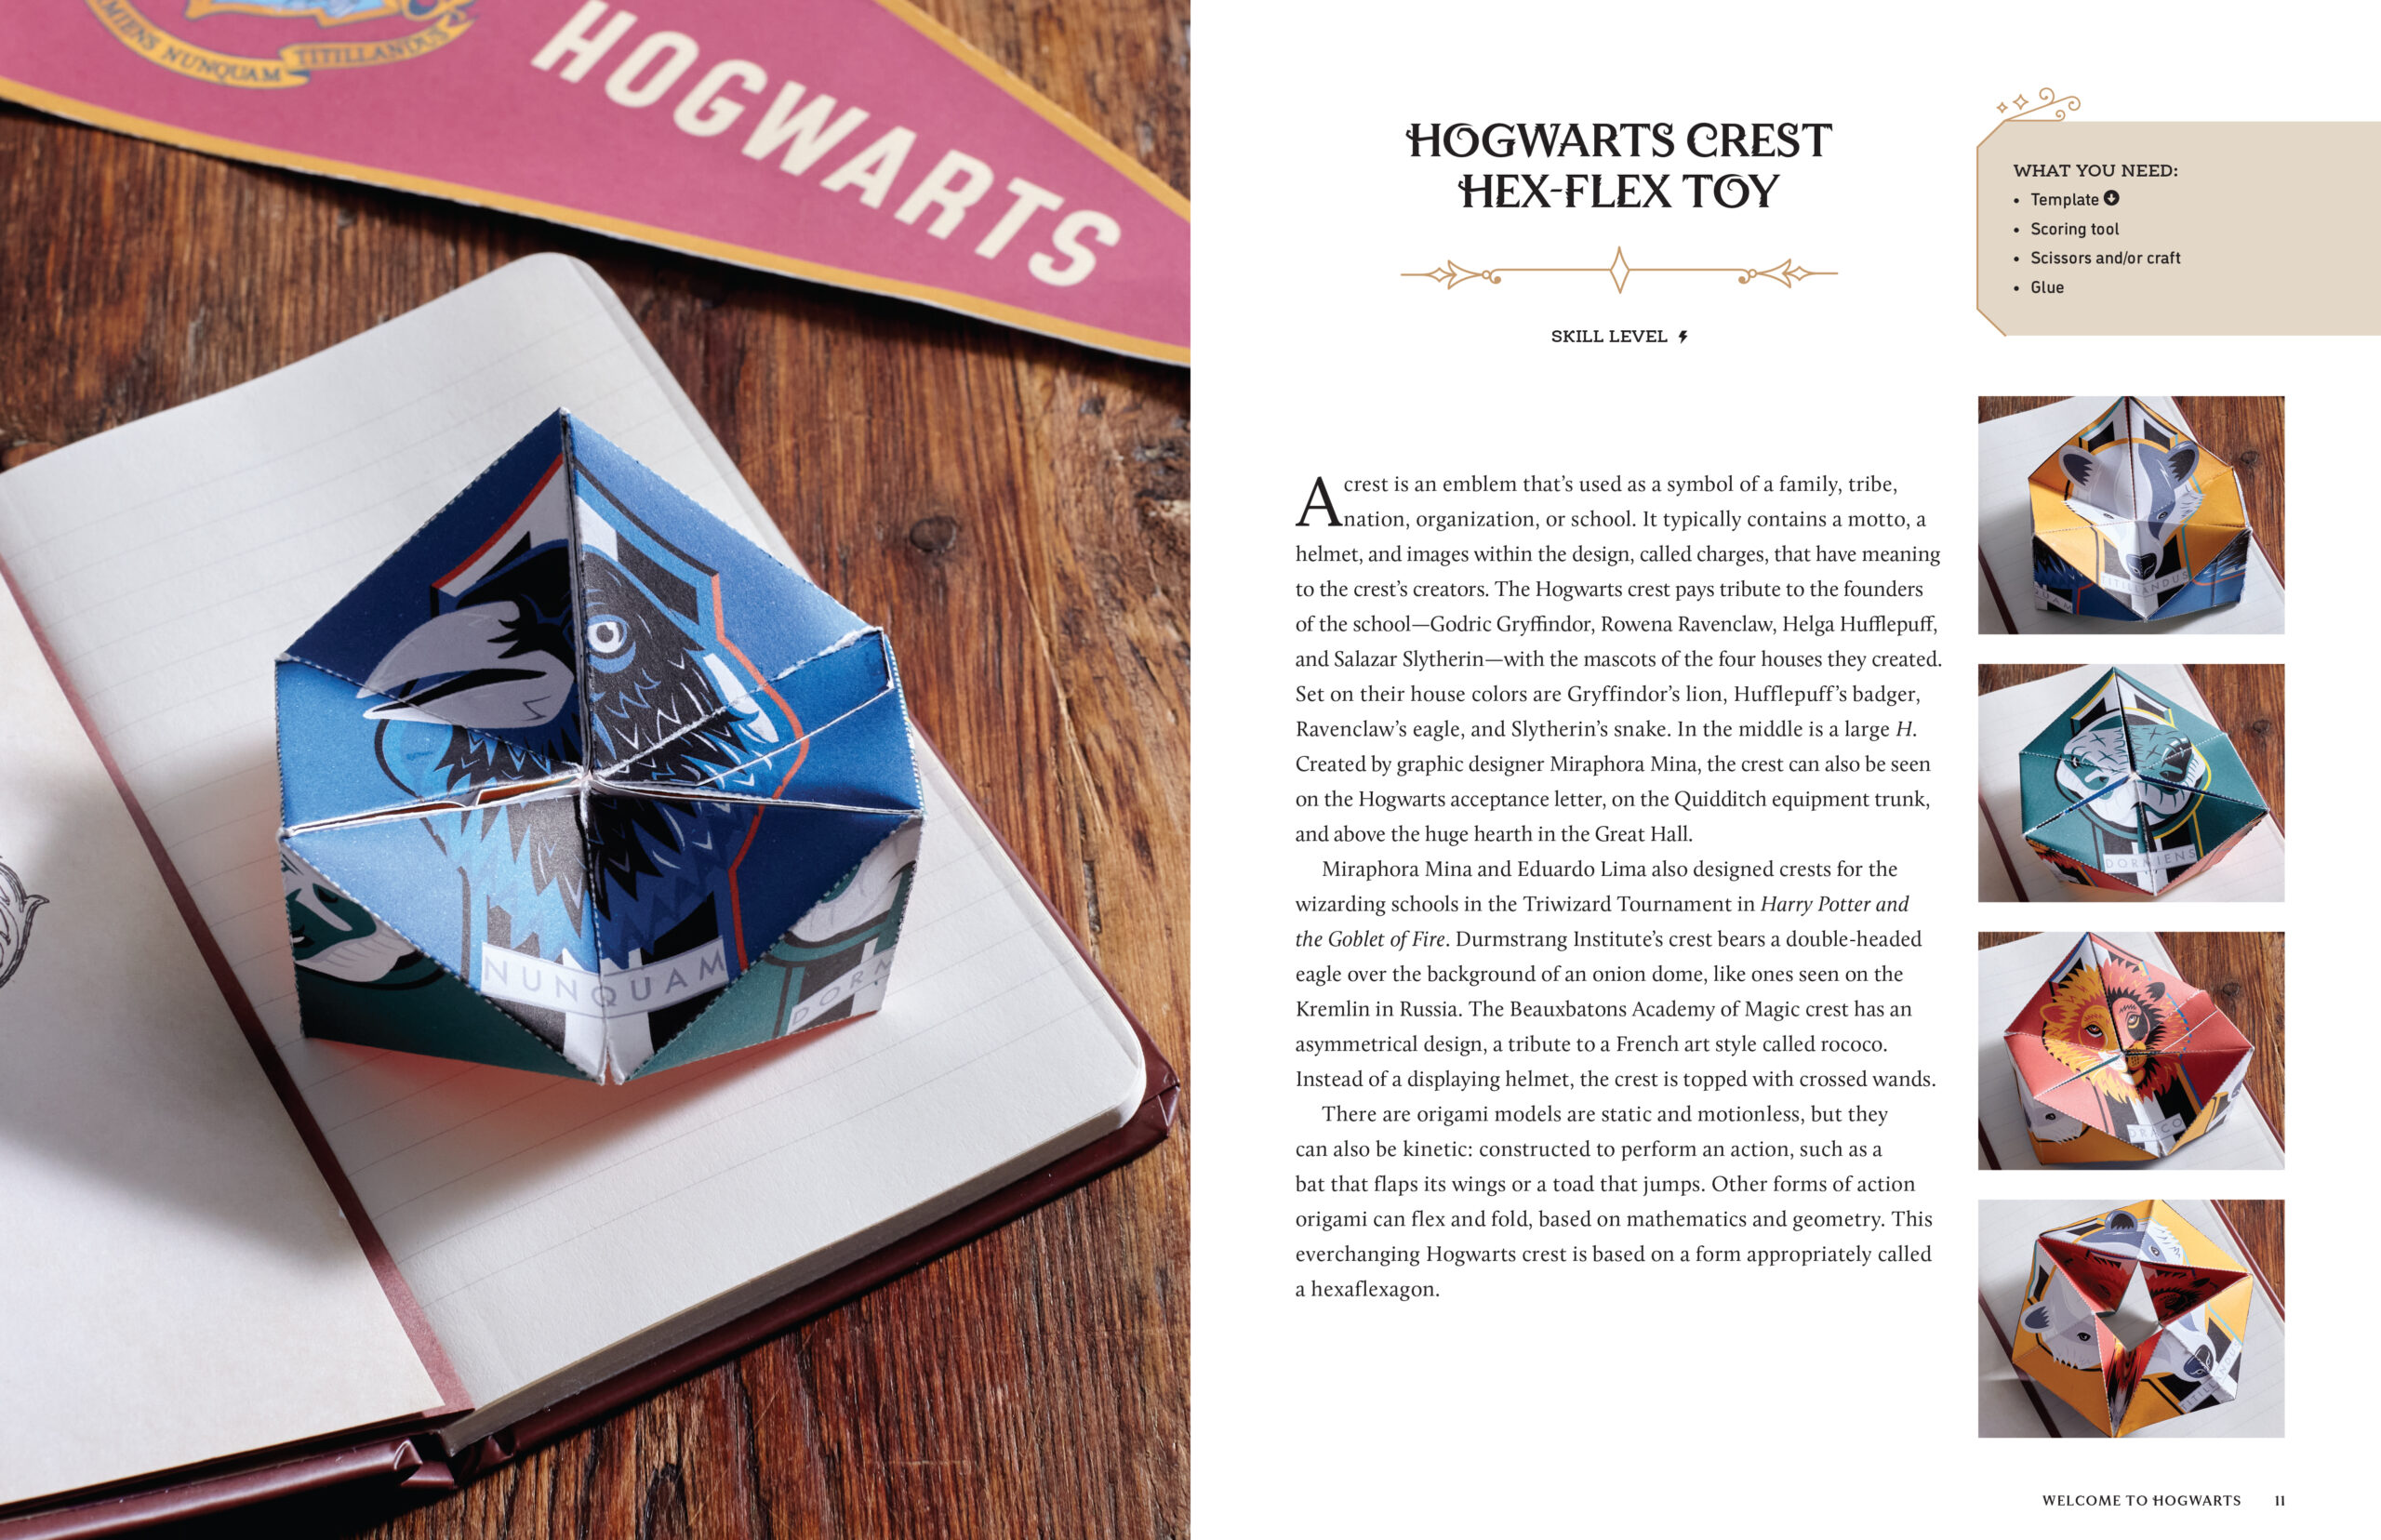 “Harry Potter: Magical Paper Crafts” features a Hogwarts crest hex-flex toy craft.